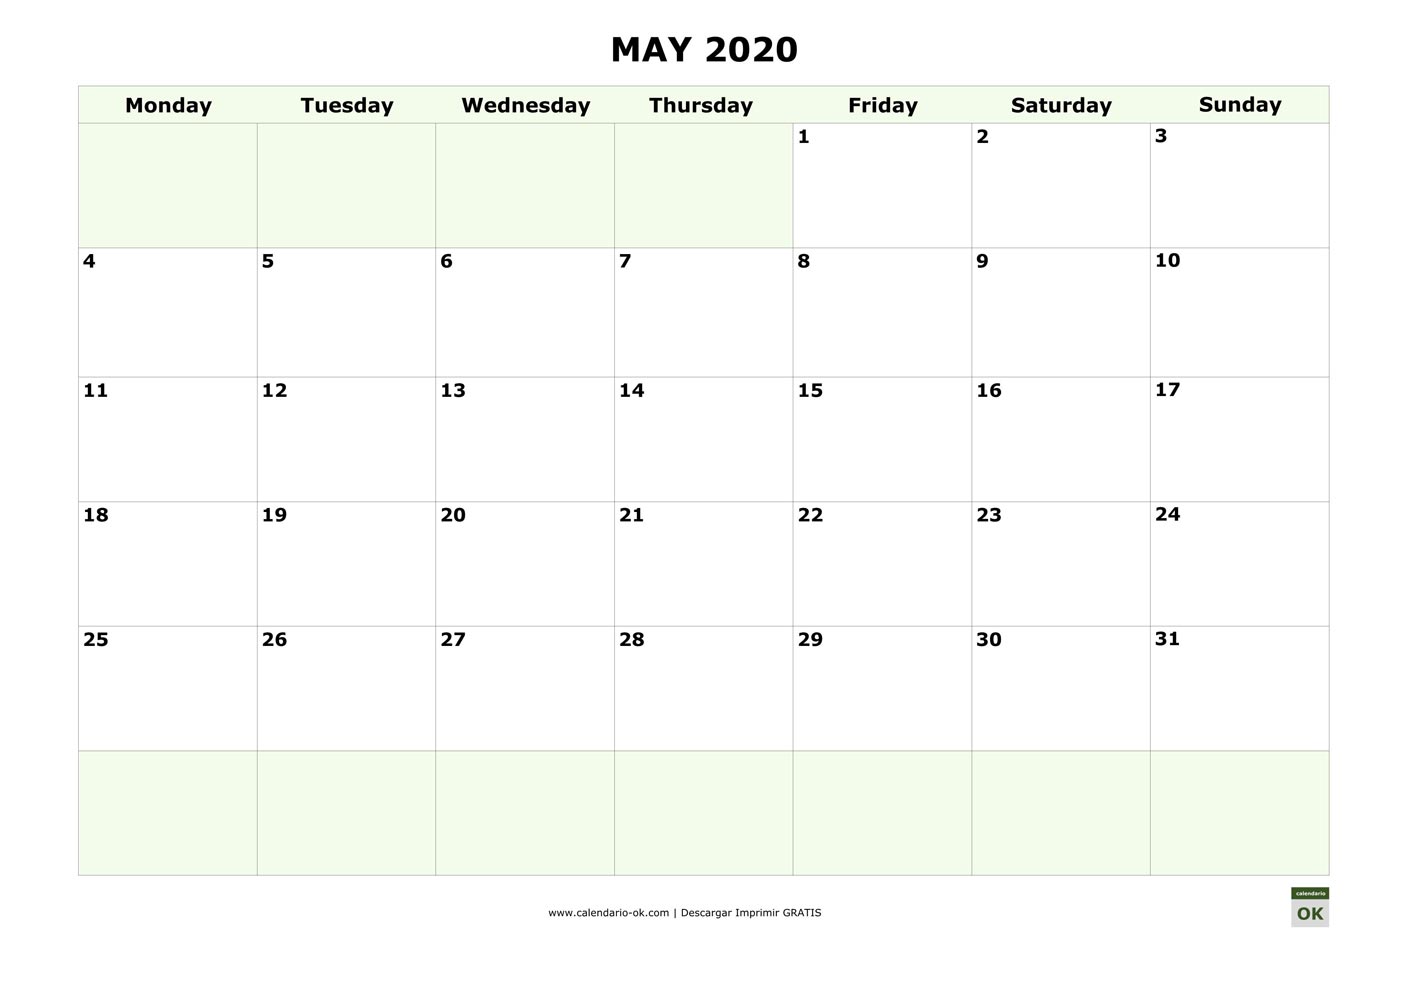 MAYO 2020 calendario en INGLES